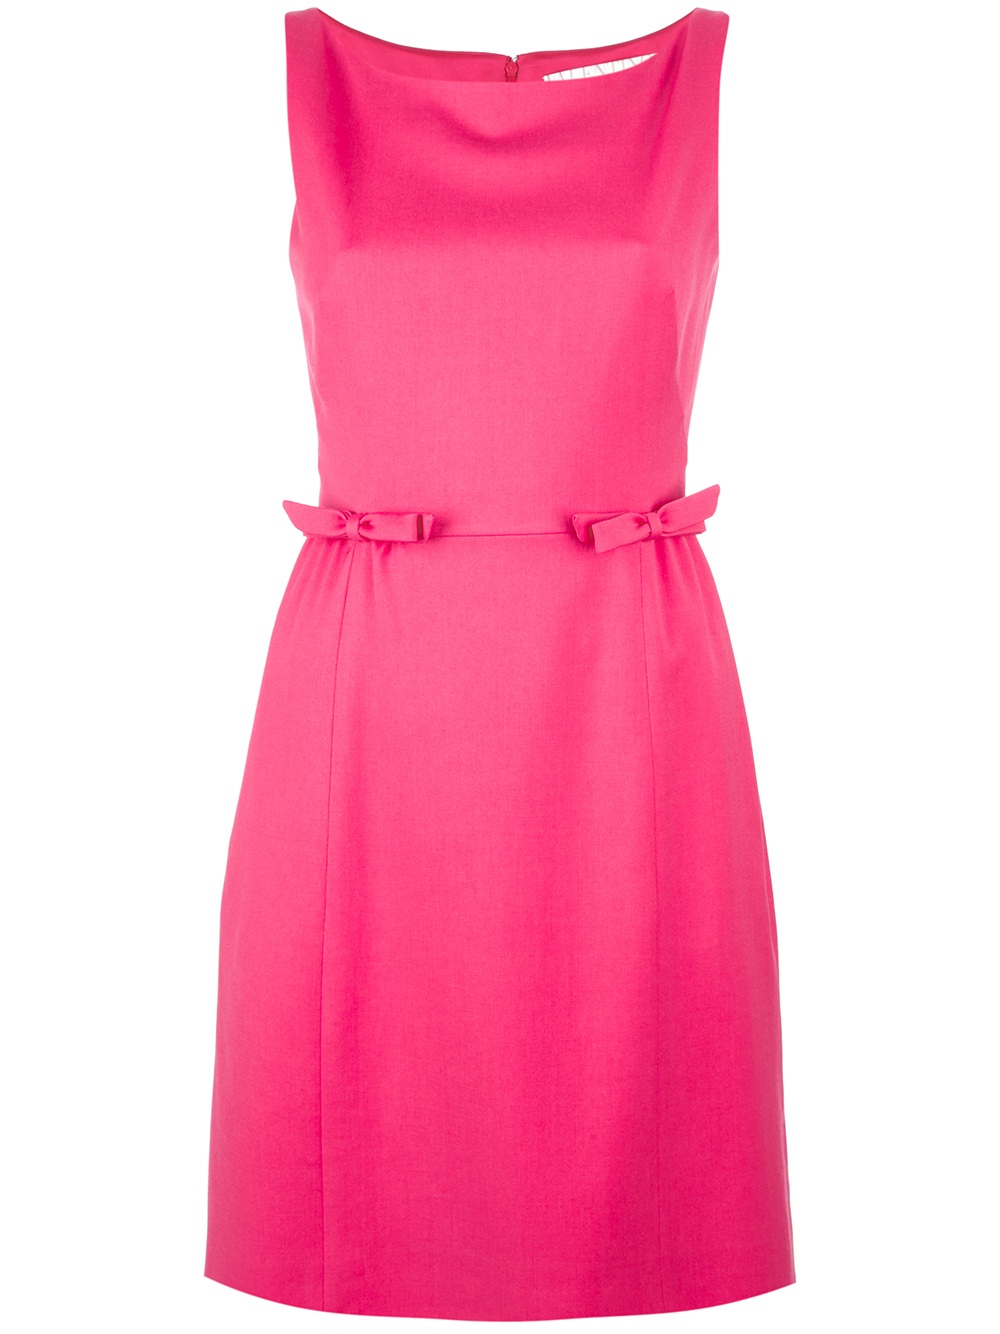 Lyst - Valentino Sleeveless Dress in Pink